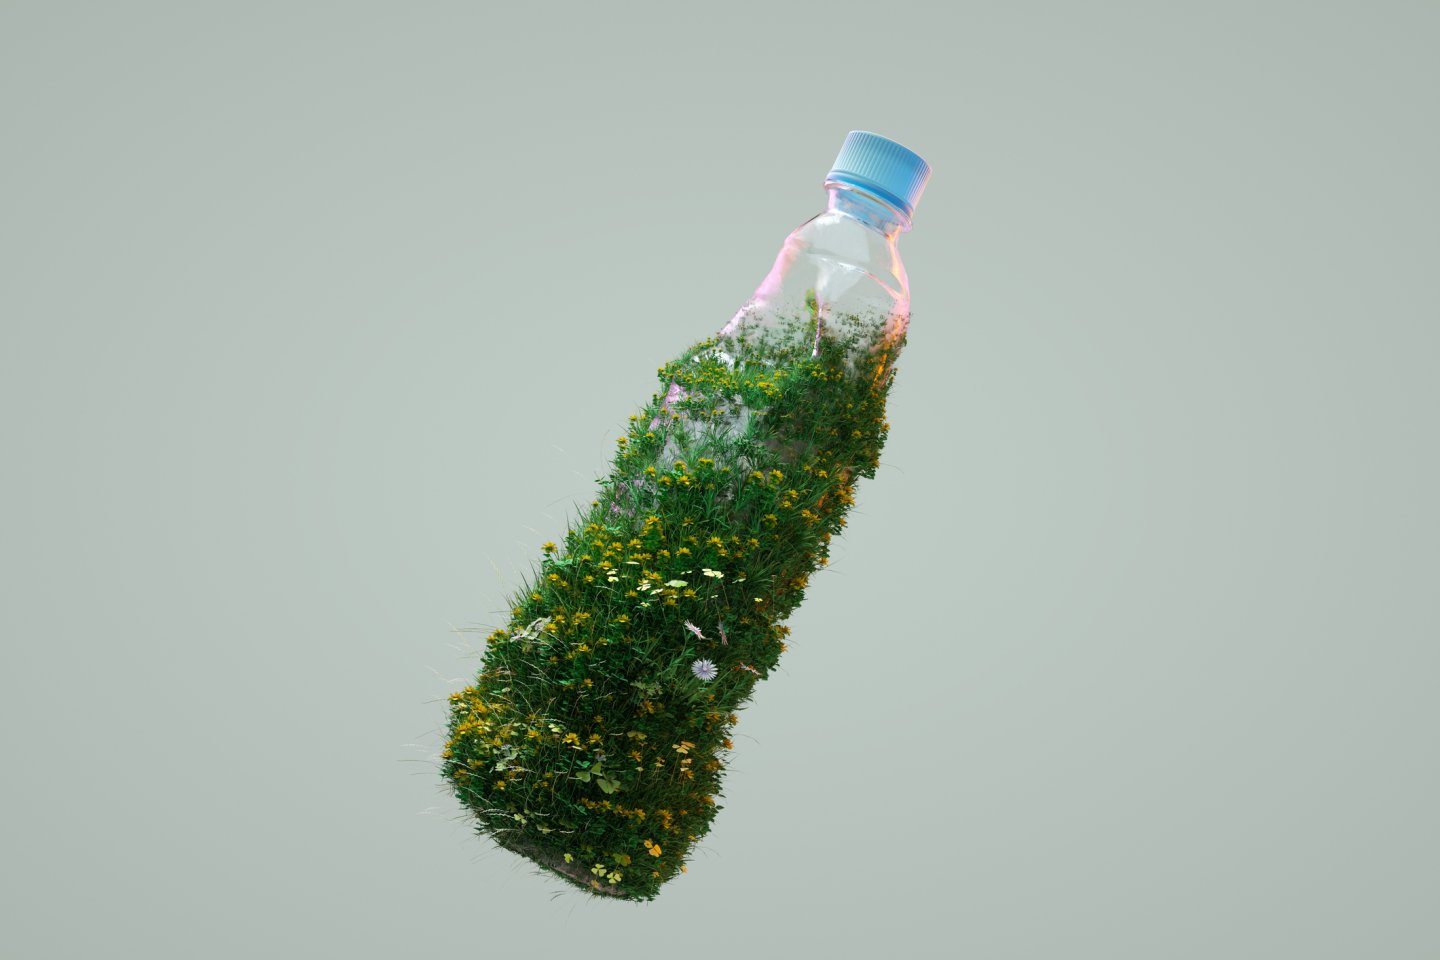 Planet - Product assessment - Green bottle